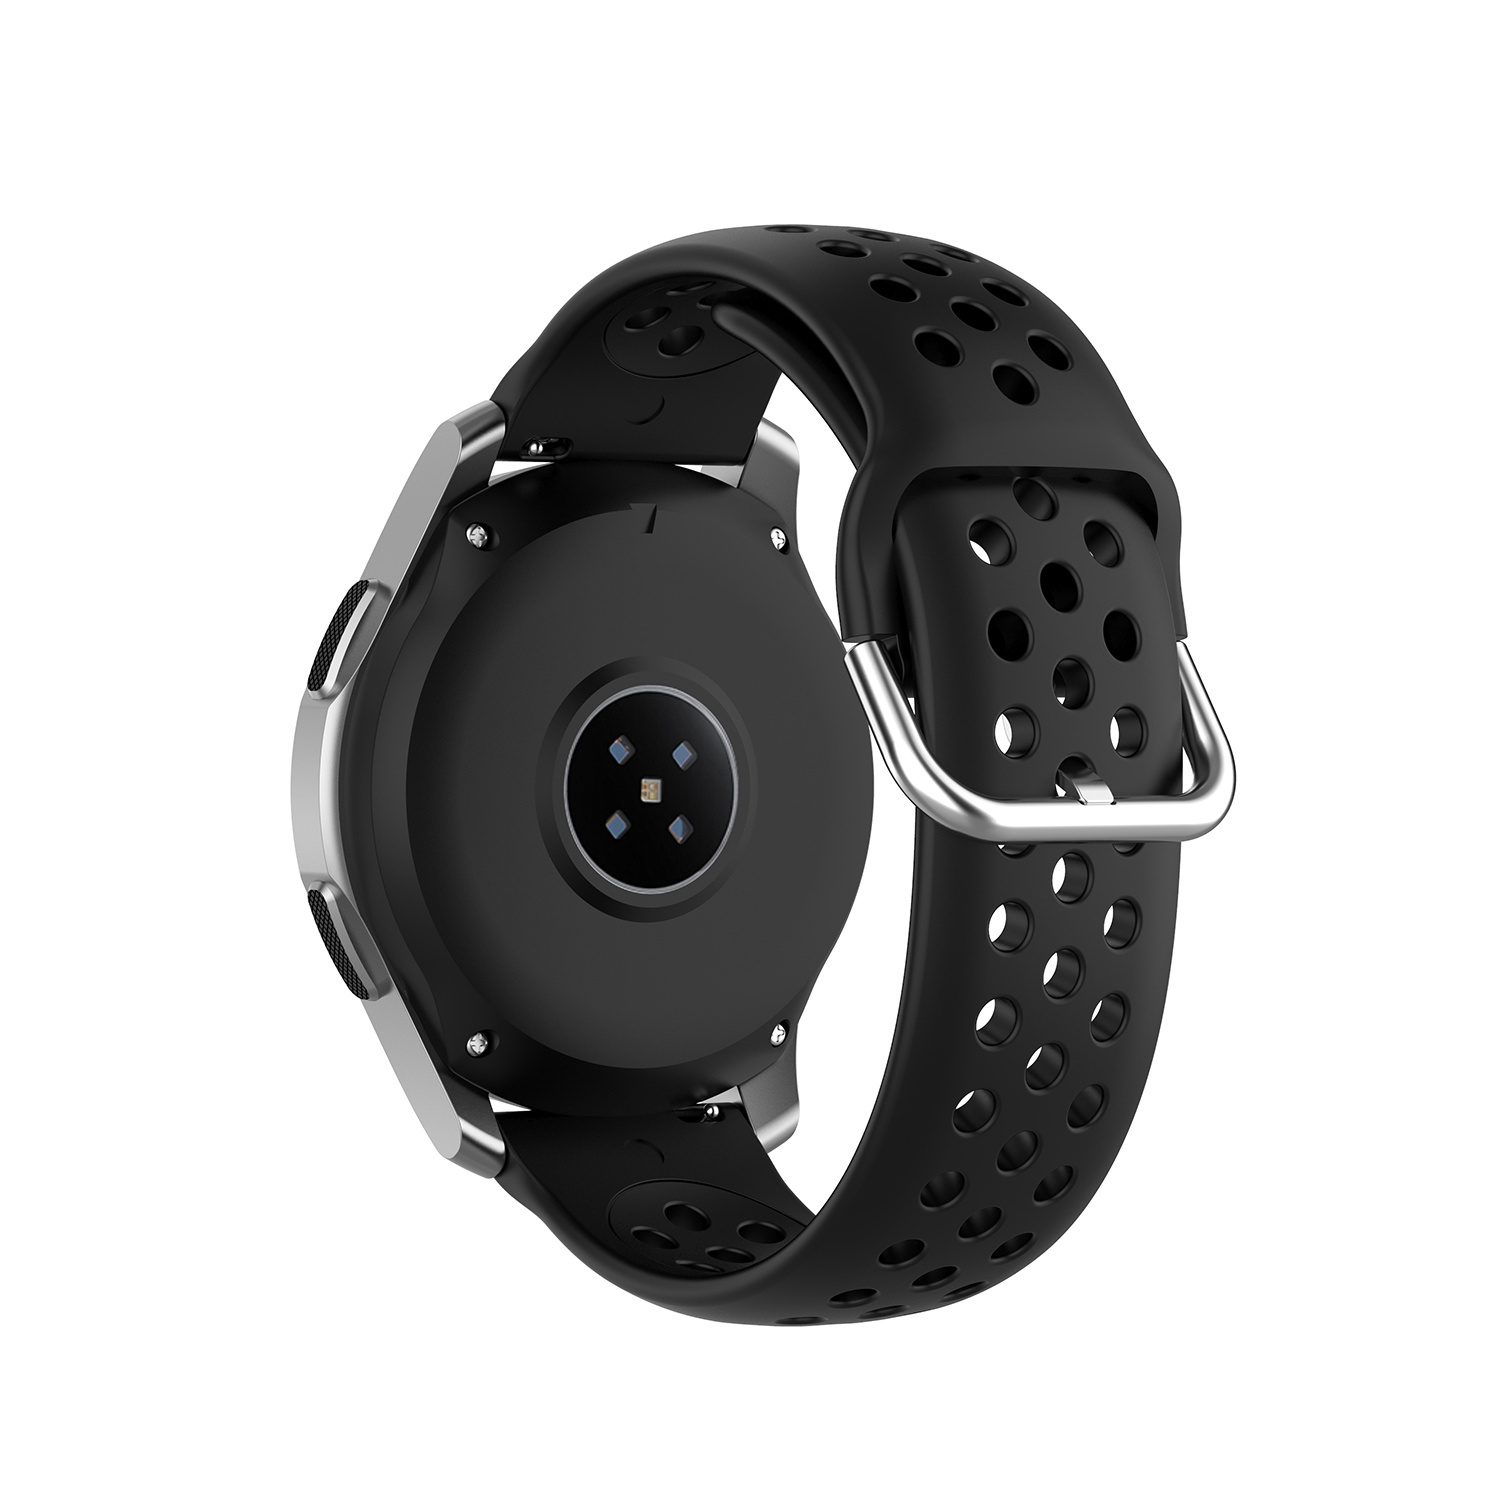 Cinturino doppia fibbia per Huawei Watch GT - nero